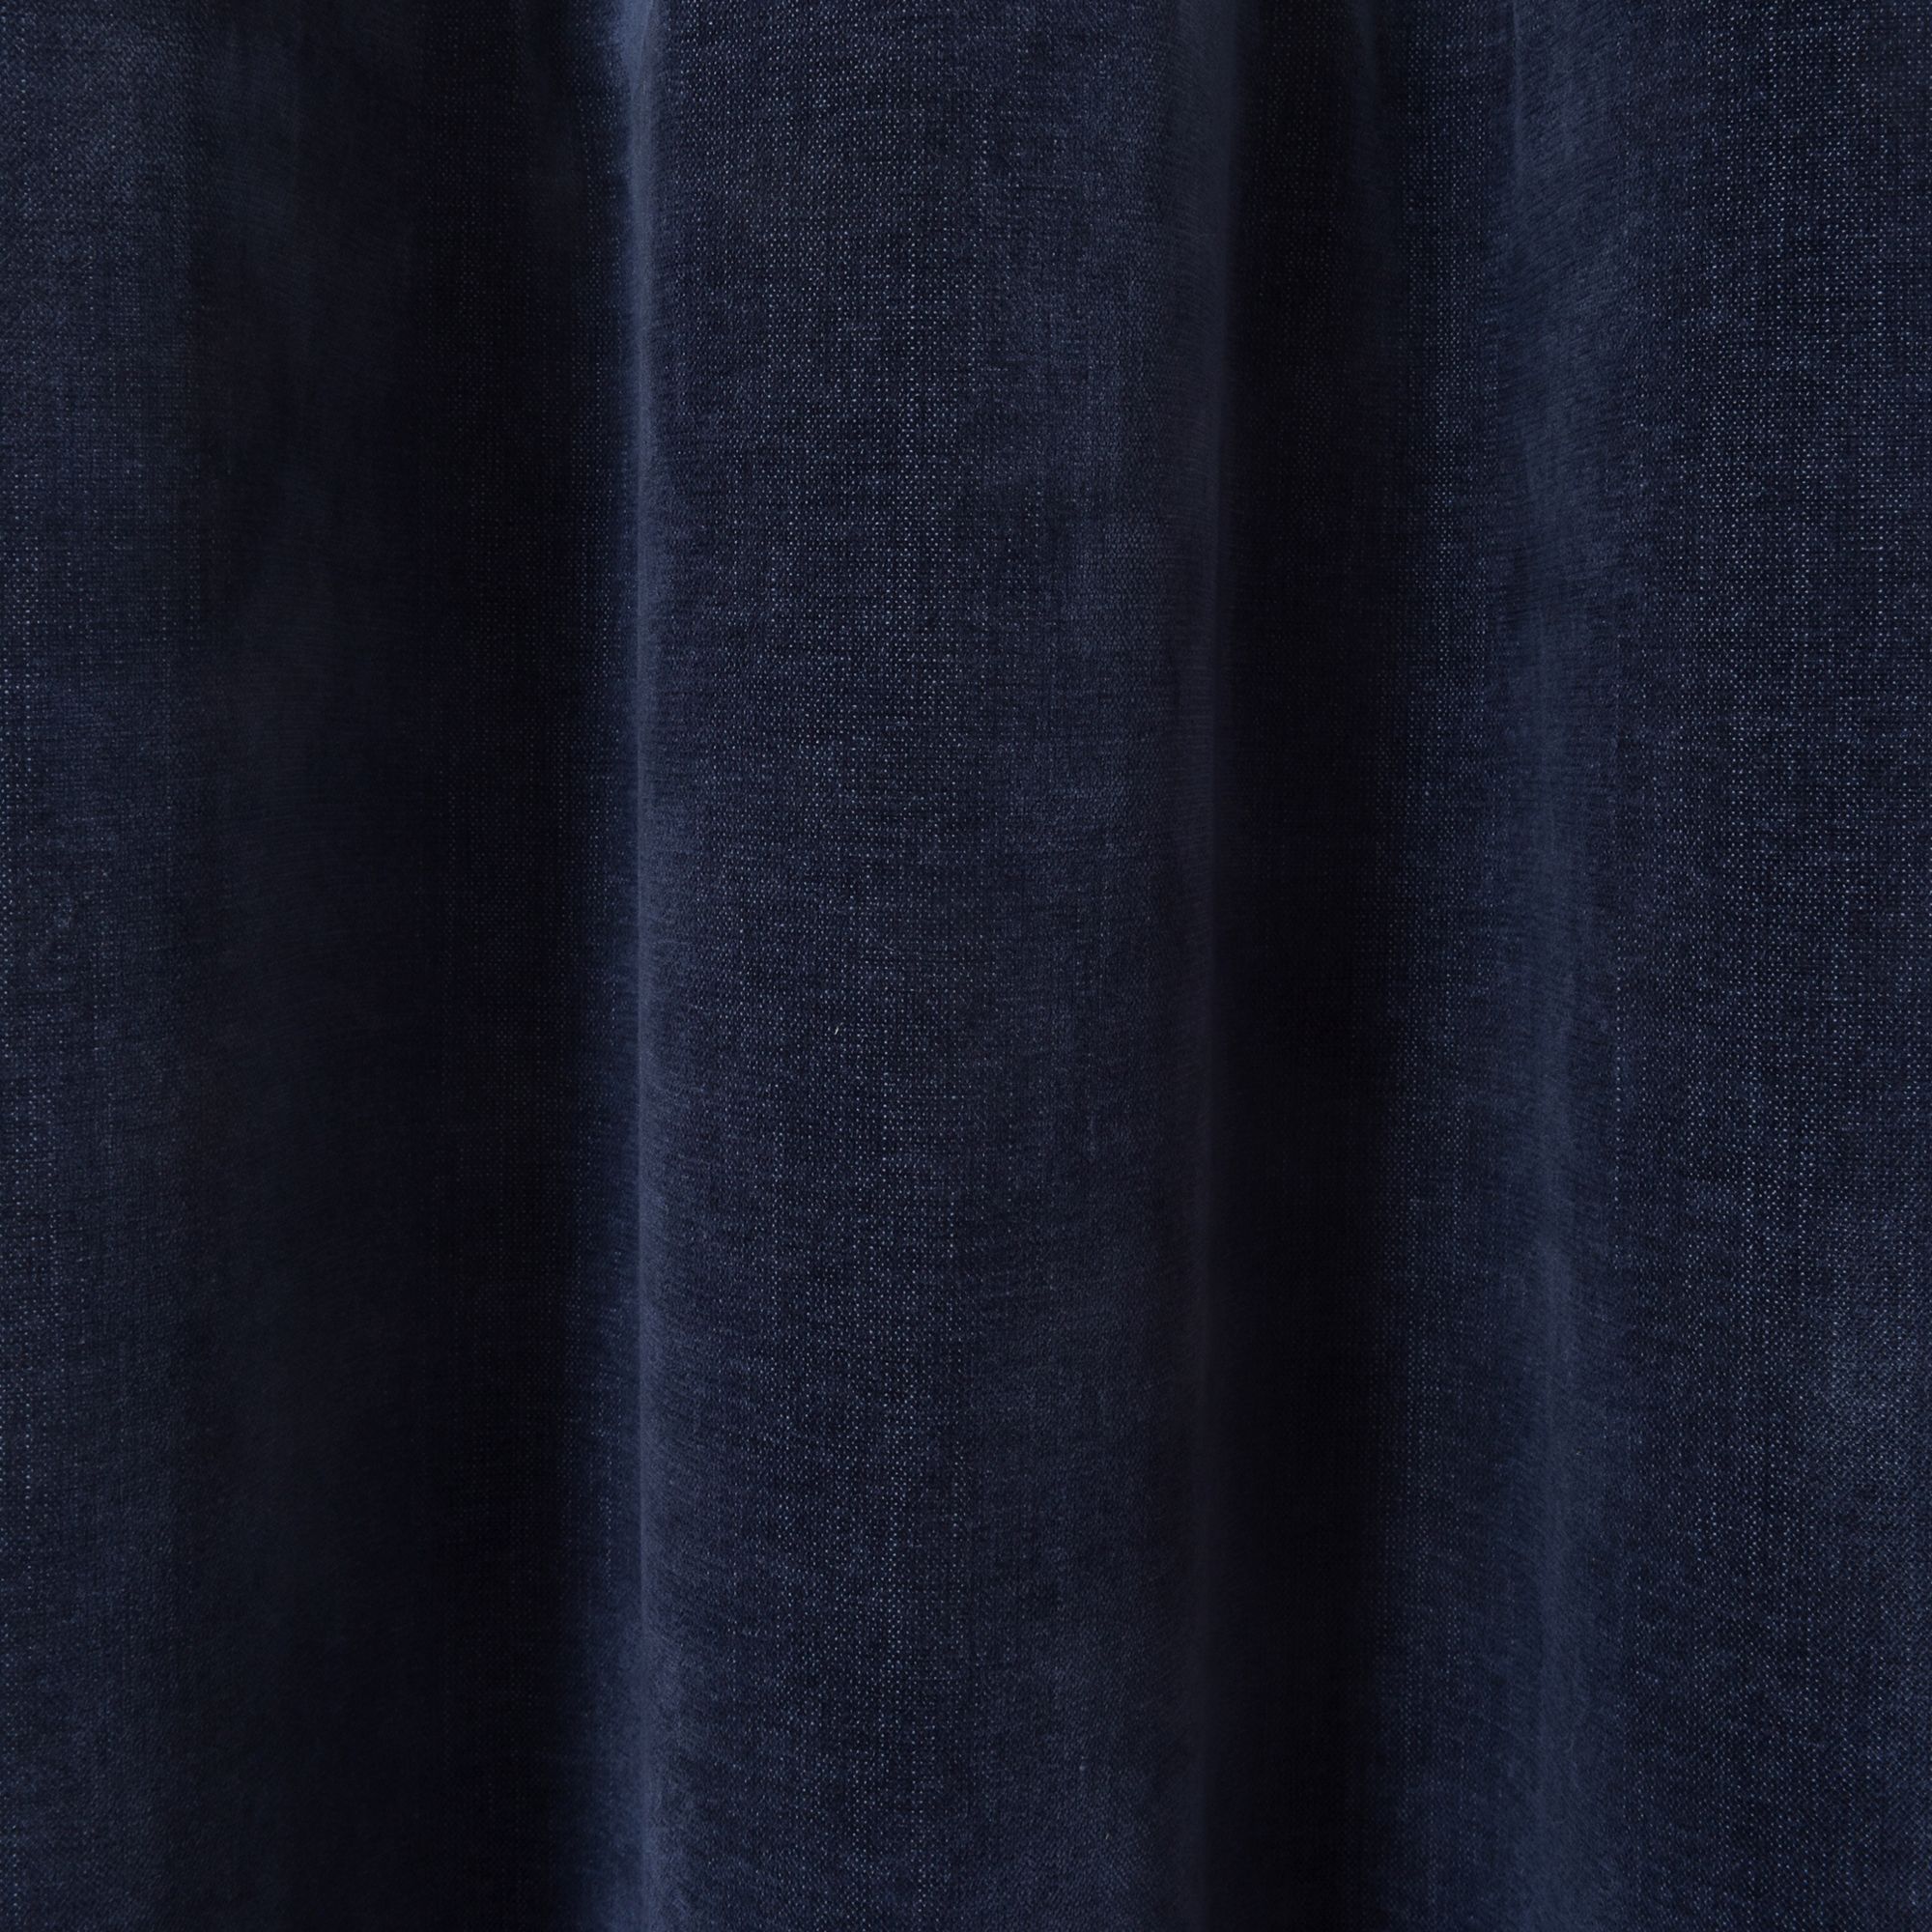 Arntzen Navy Plain woven Lined Eyelet Curtain (W)167cm (L)228cm, Pair